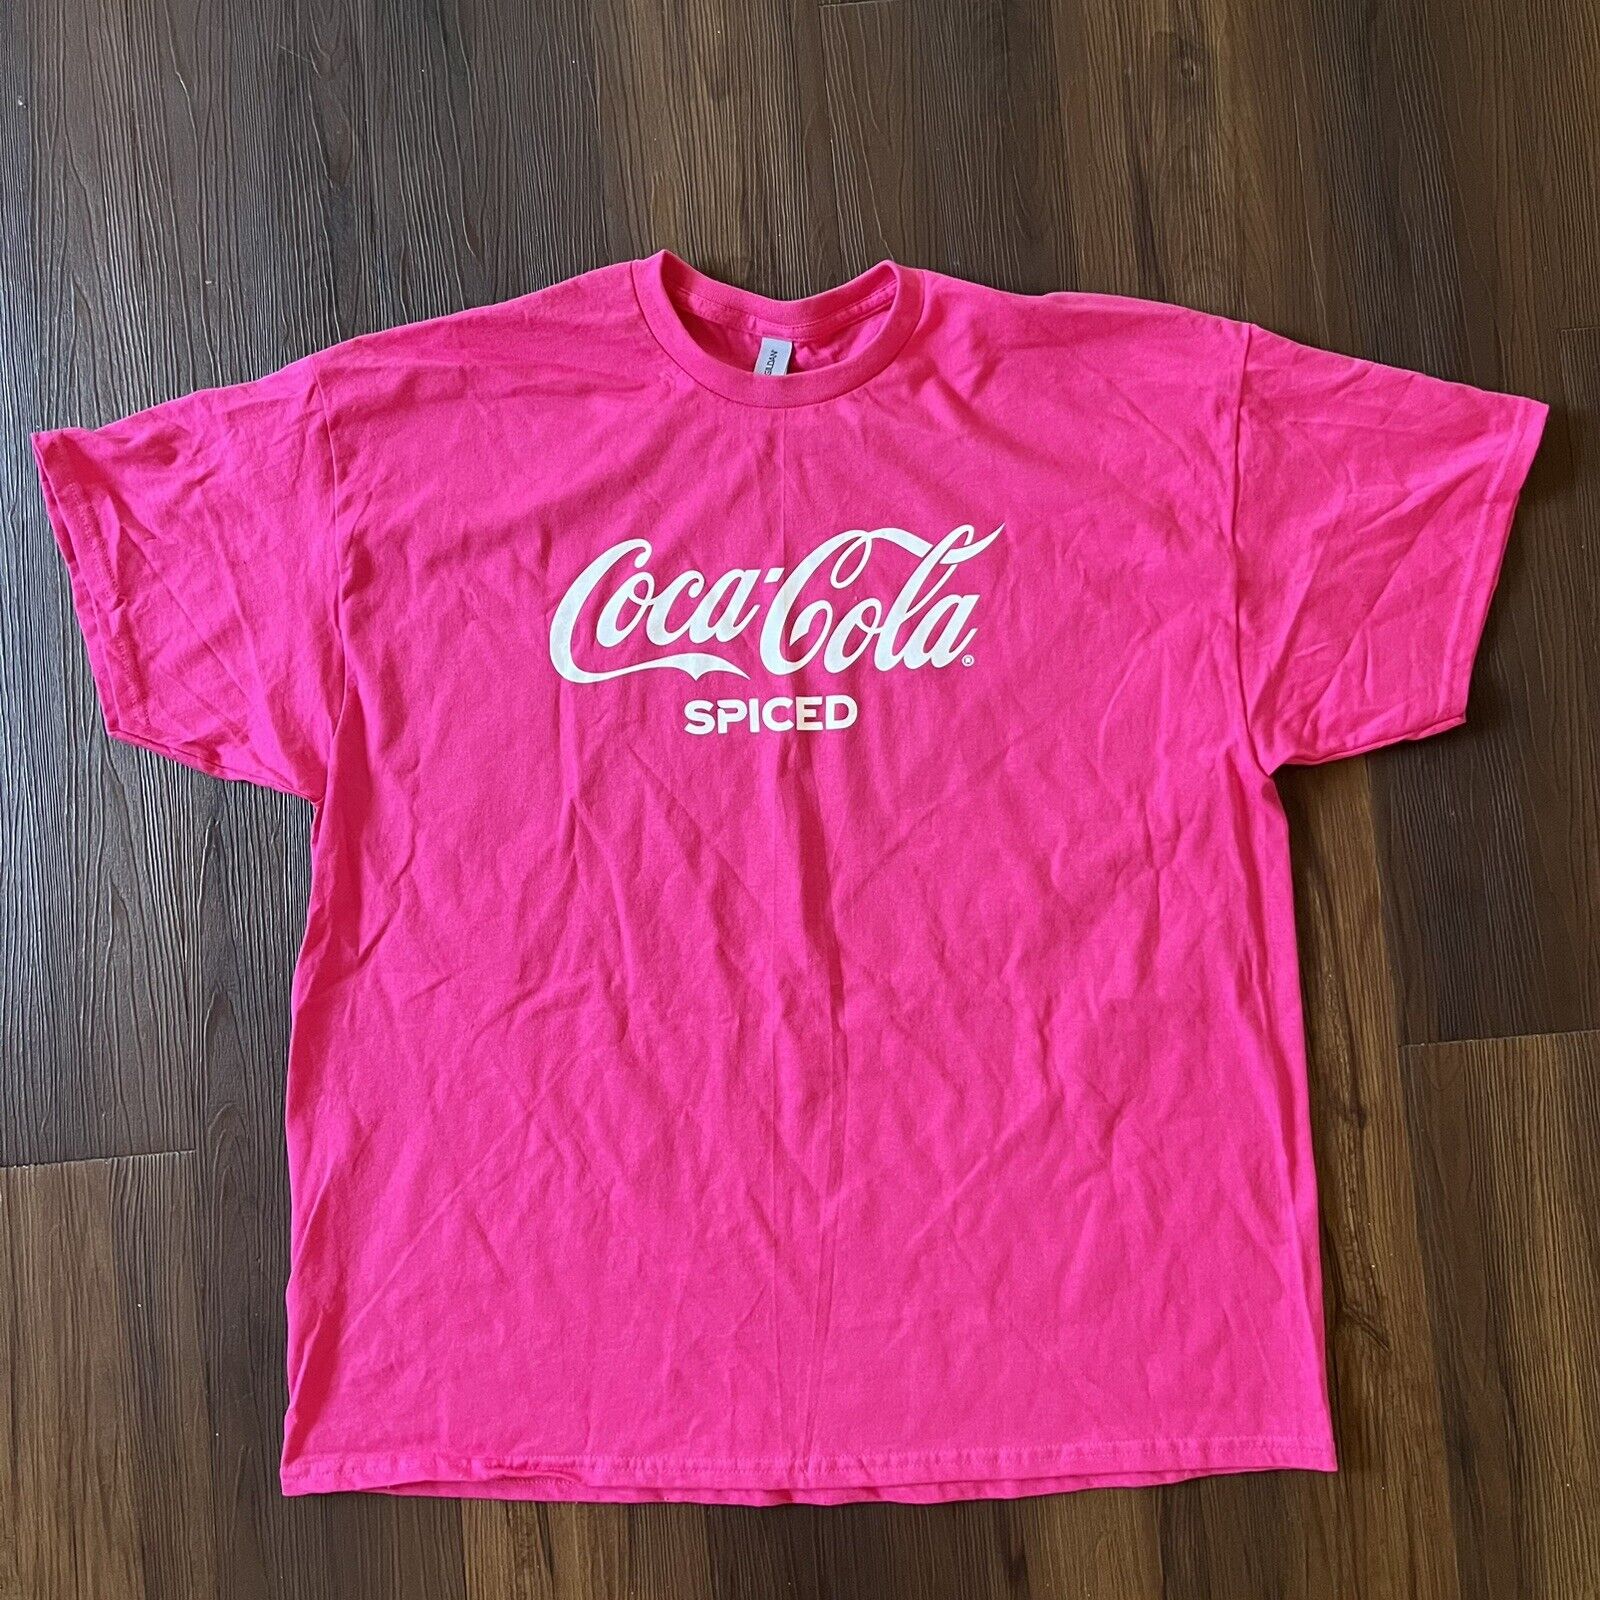 Coca Cola Spiced Pink Short Sleeve T-Shirt Tee Sz 2XL XXL - NWT - New, No Tags